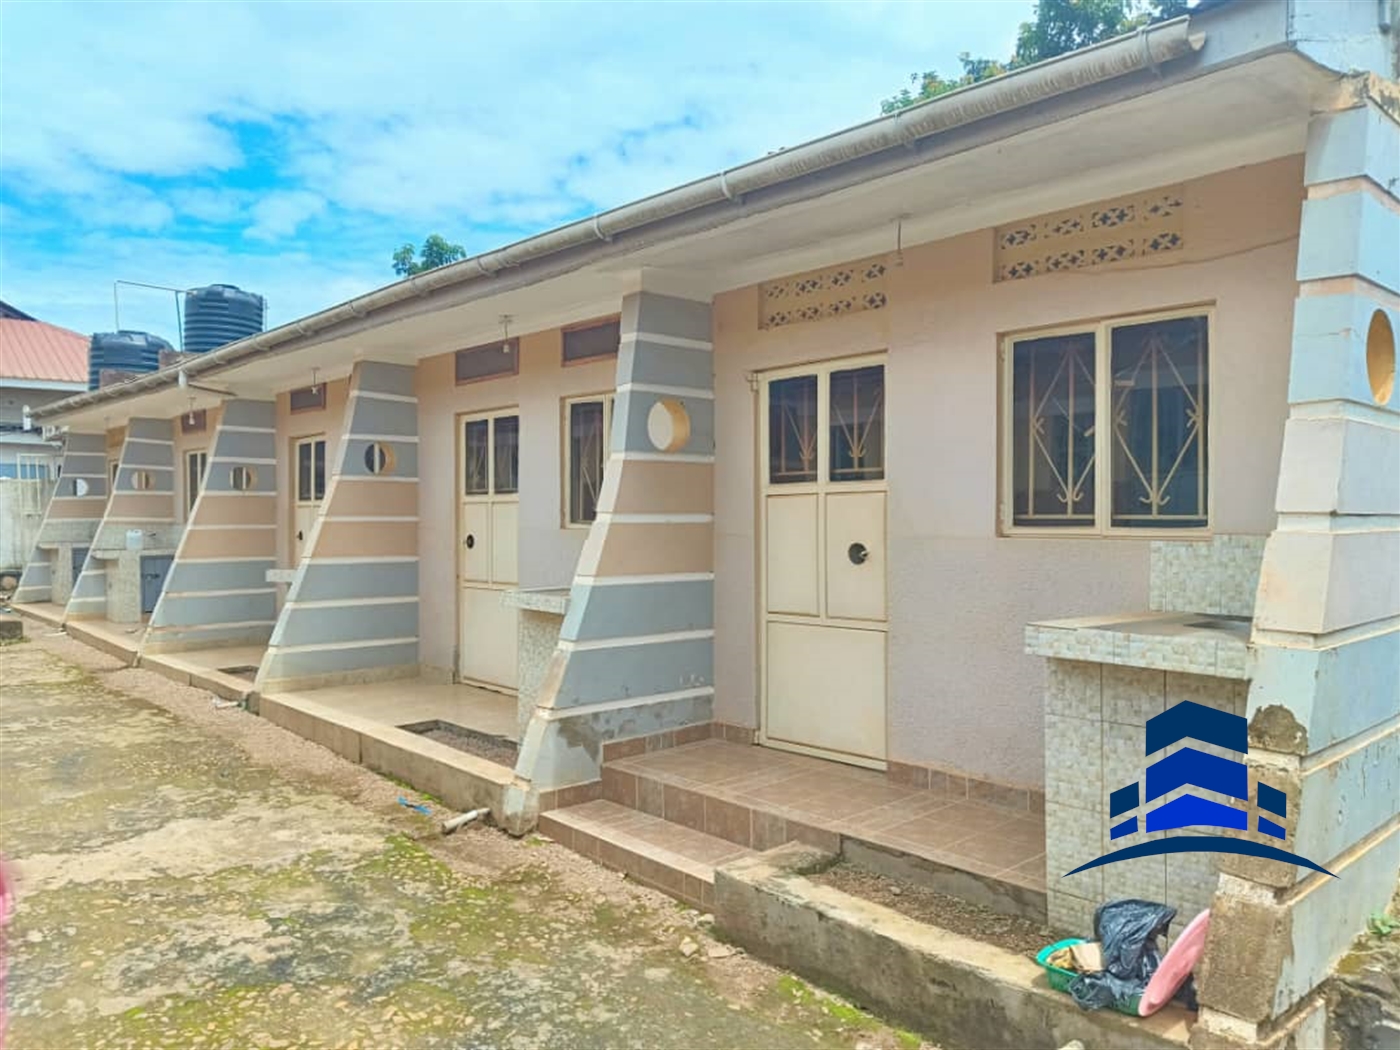 Rental units for sale in Ucu Mukono